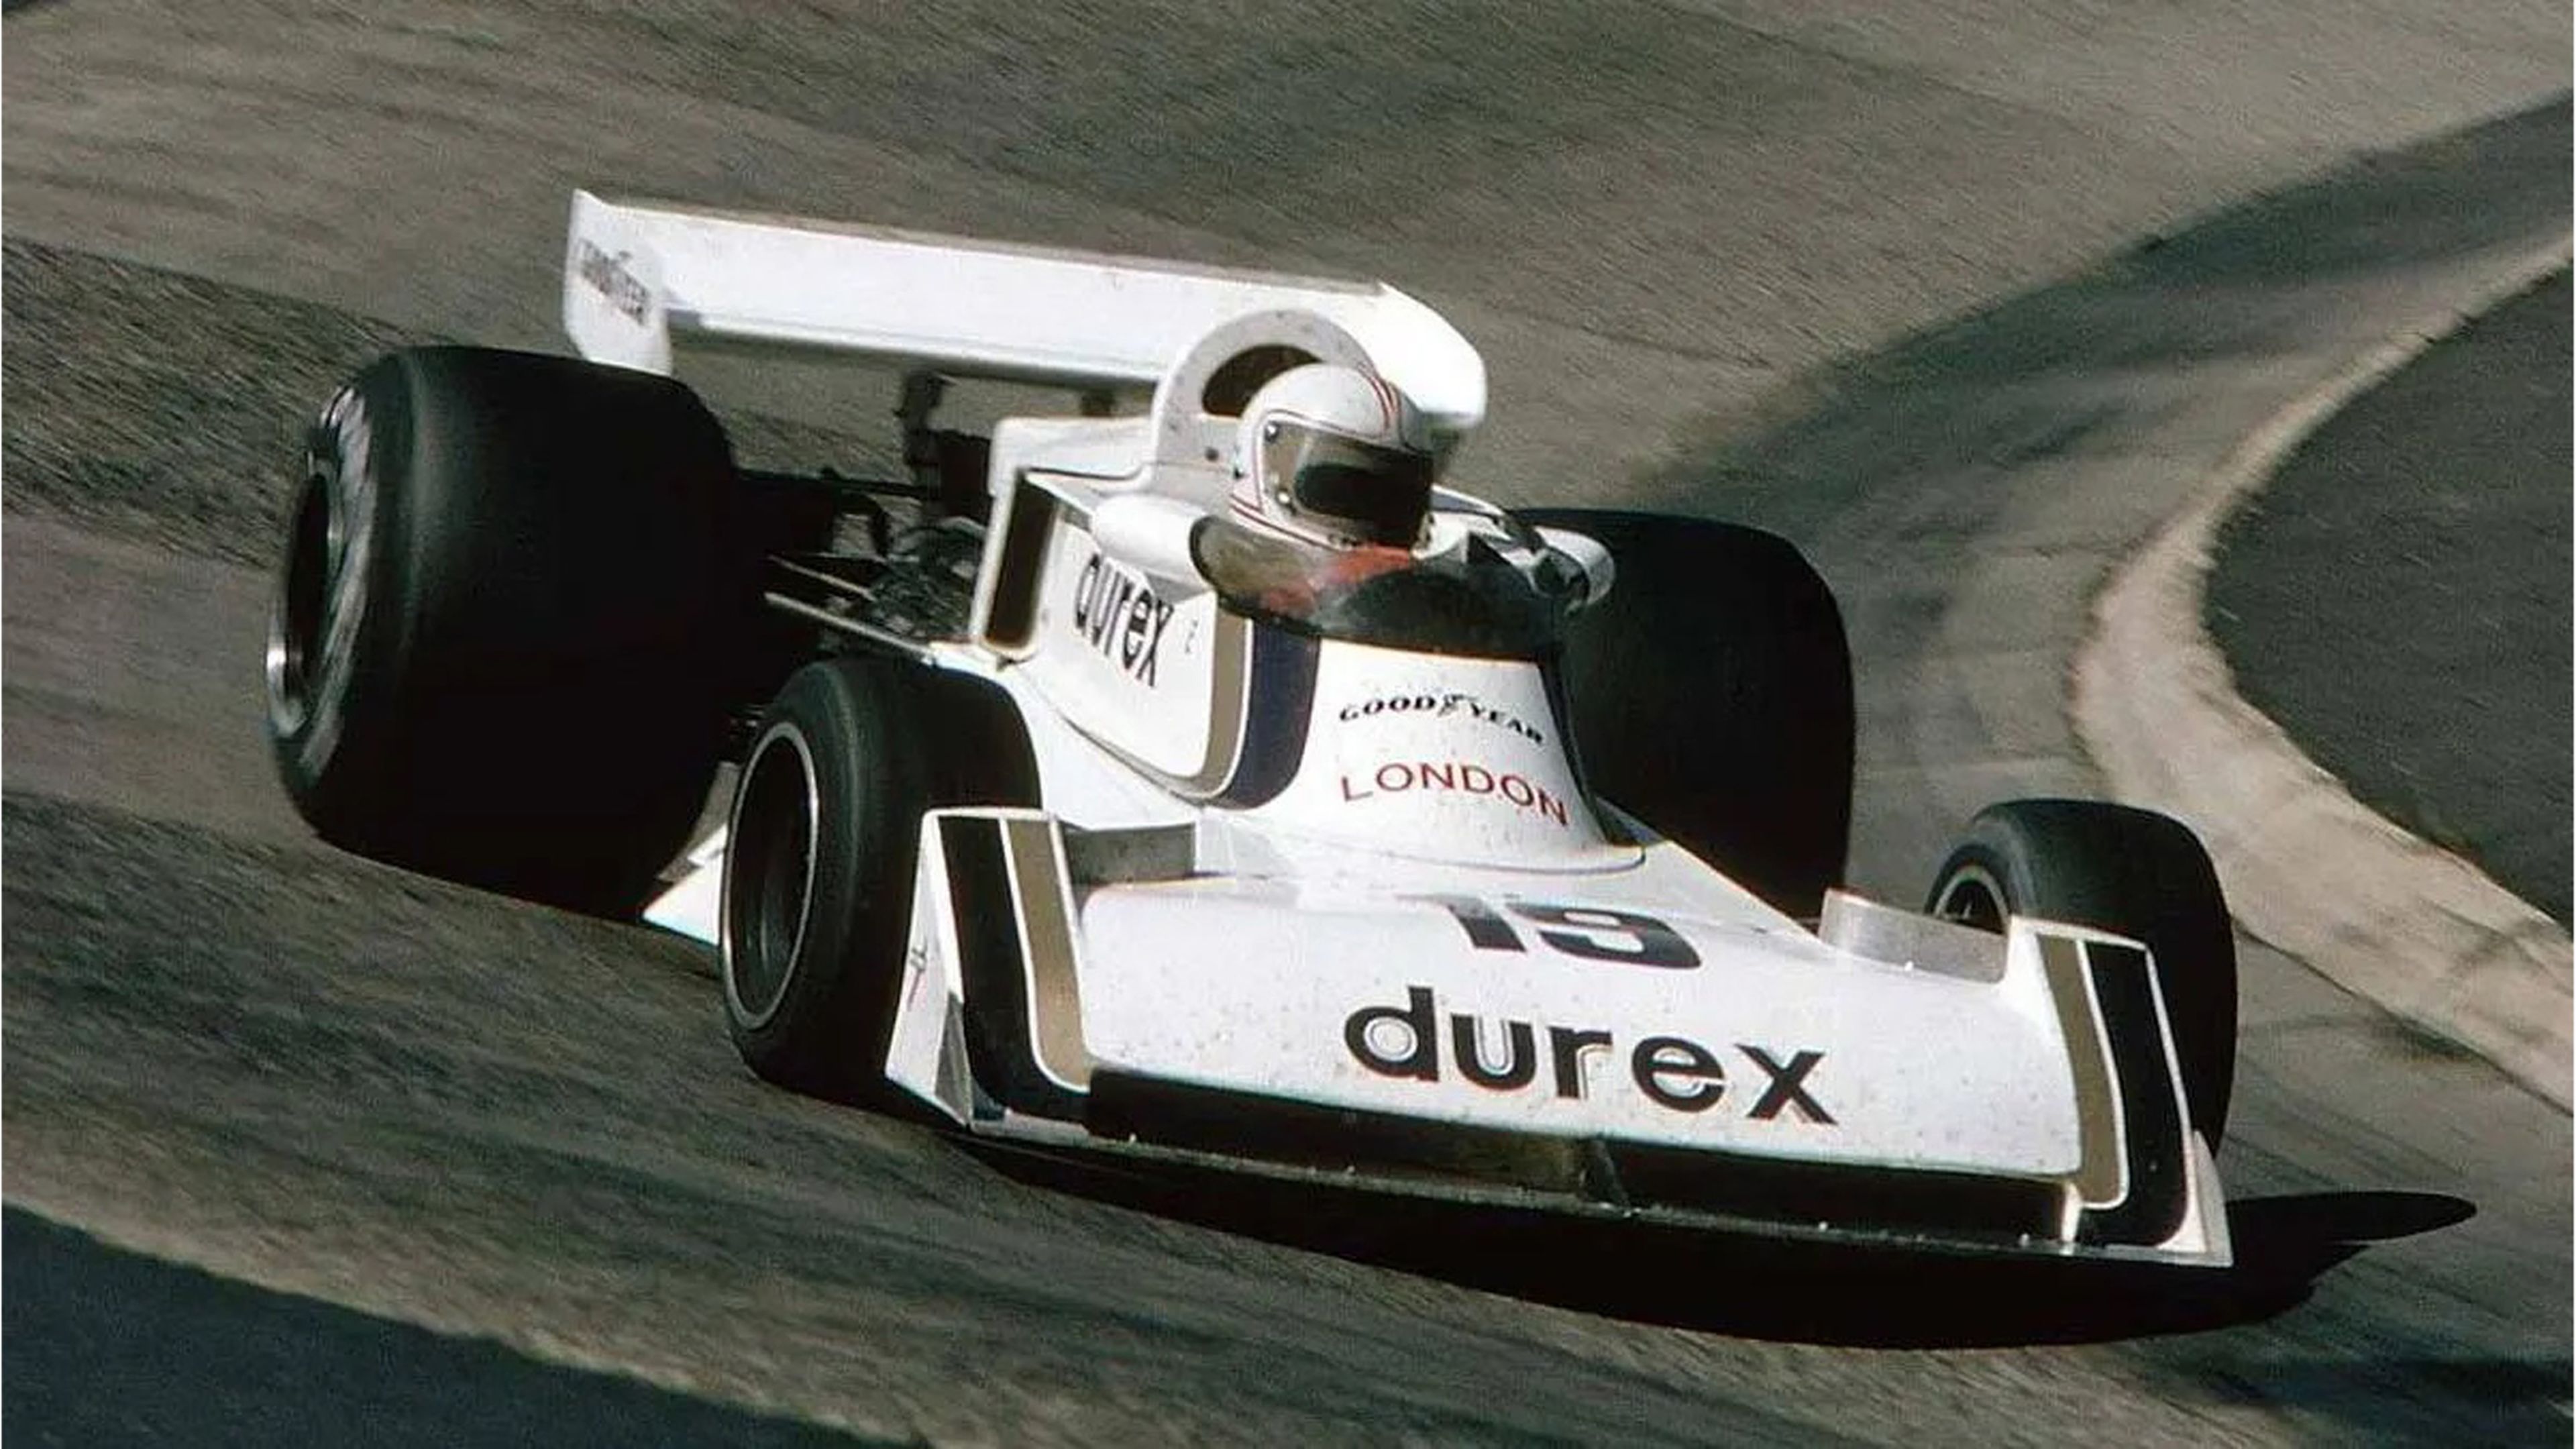 John Surtees and Durex